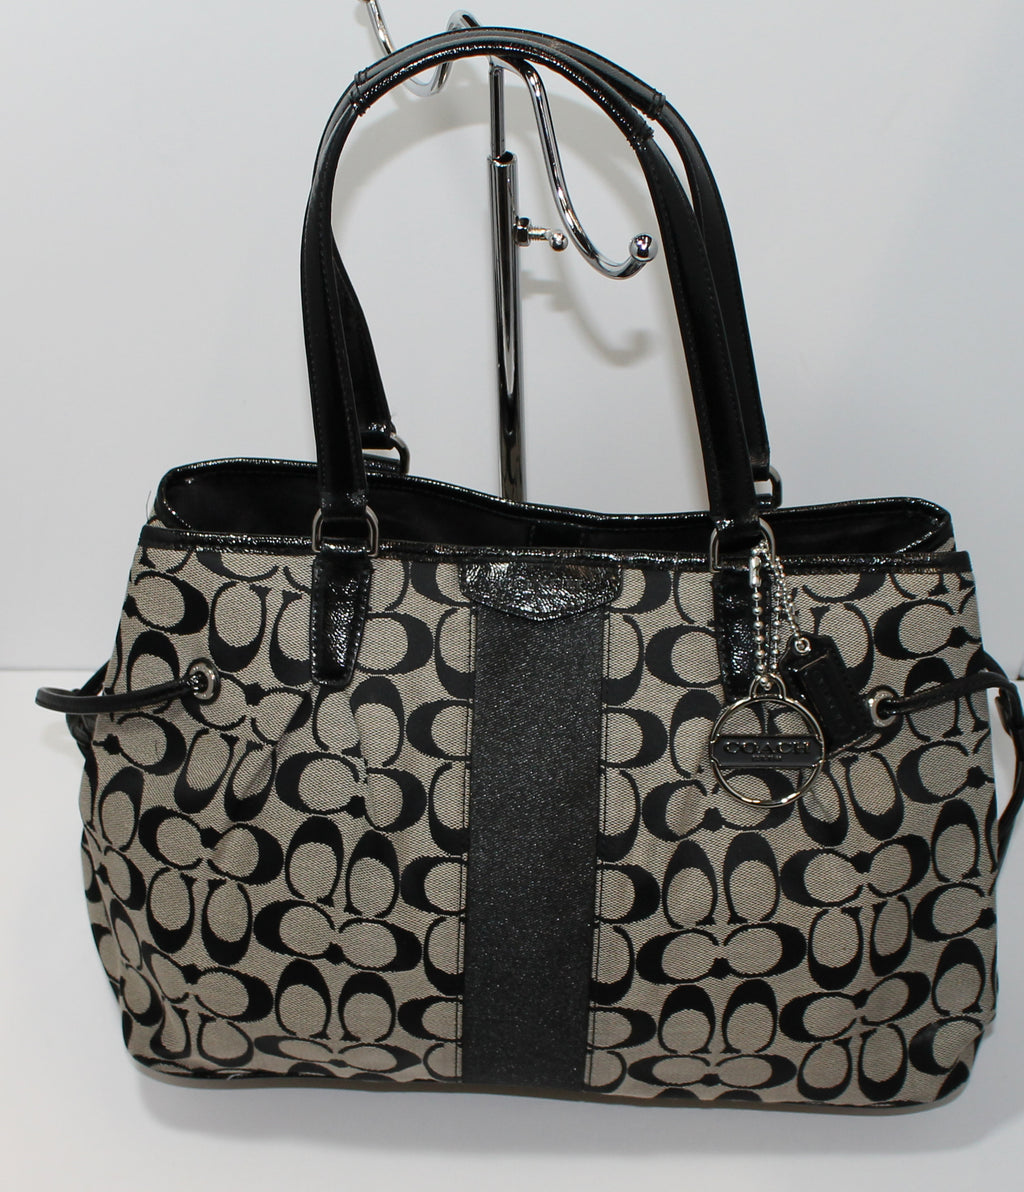 Signature sufflette leather handbag Coach Black in Leather - 41615784